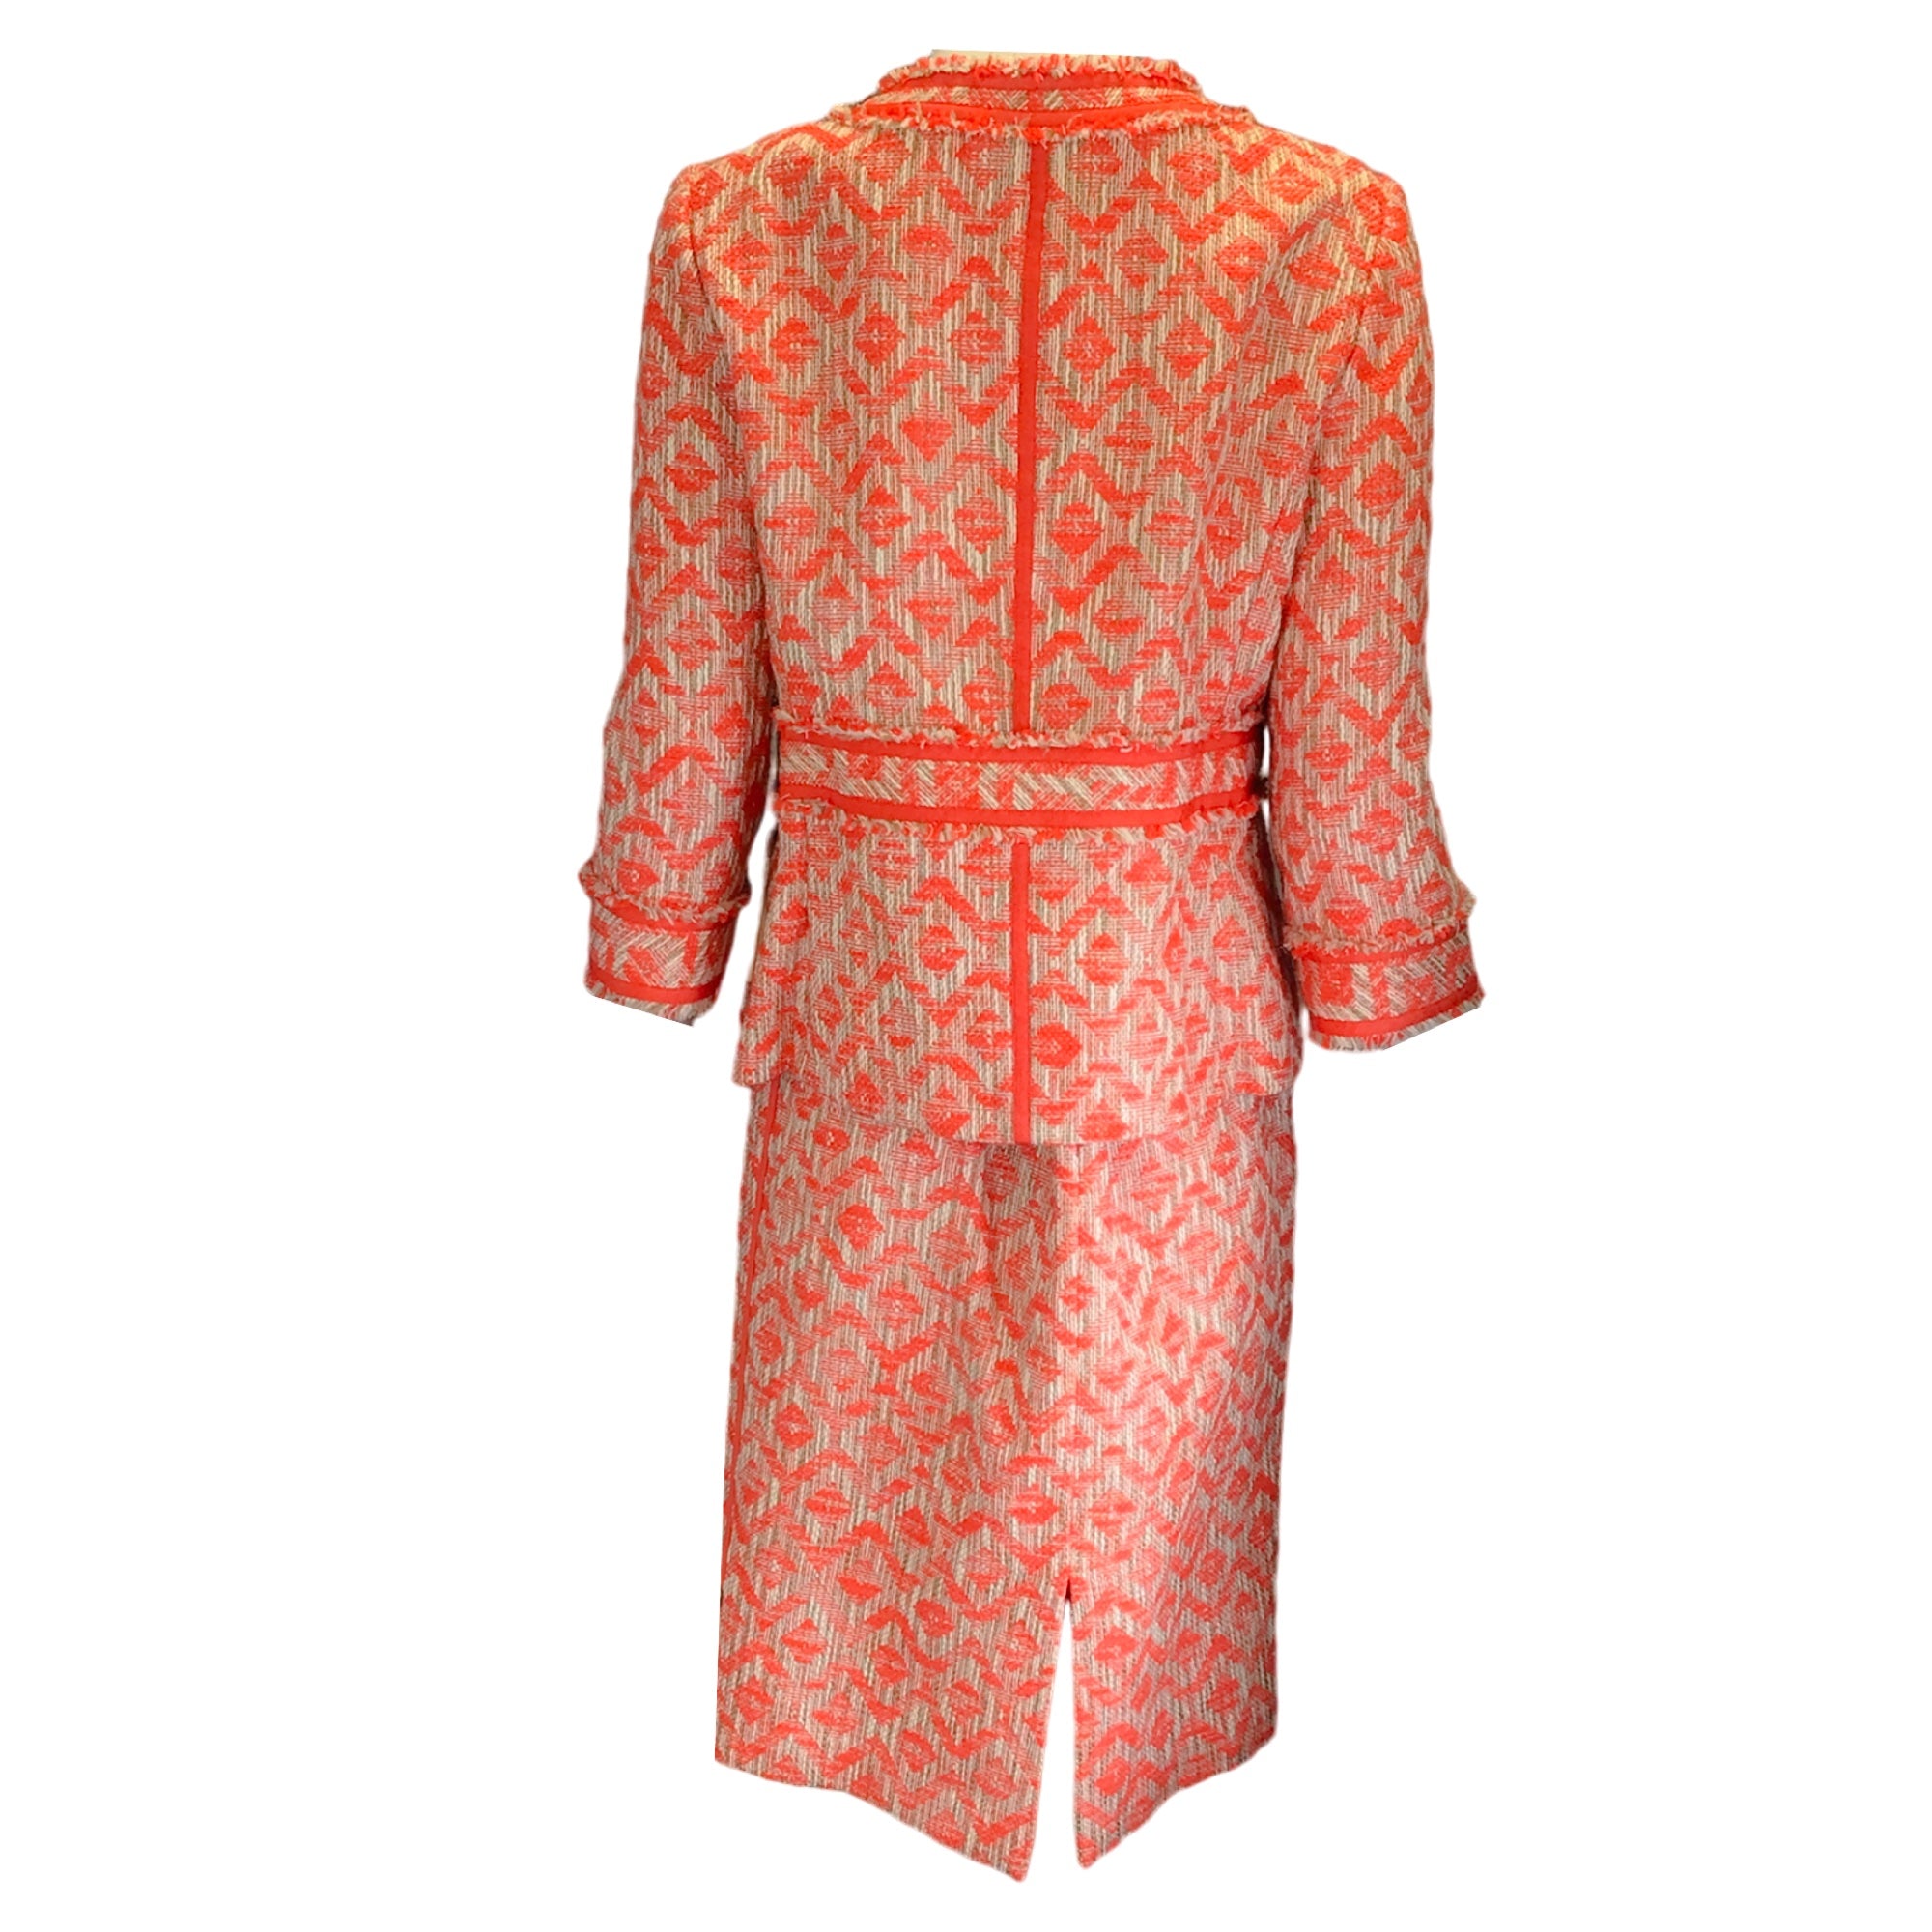 Lafayette 148 New York Orange / Ivory / Tan Cotton Tweed Jacket and Skirt Two-Piece Set